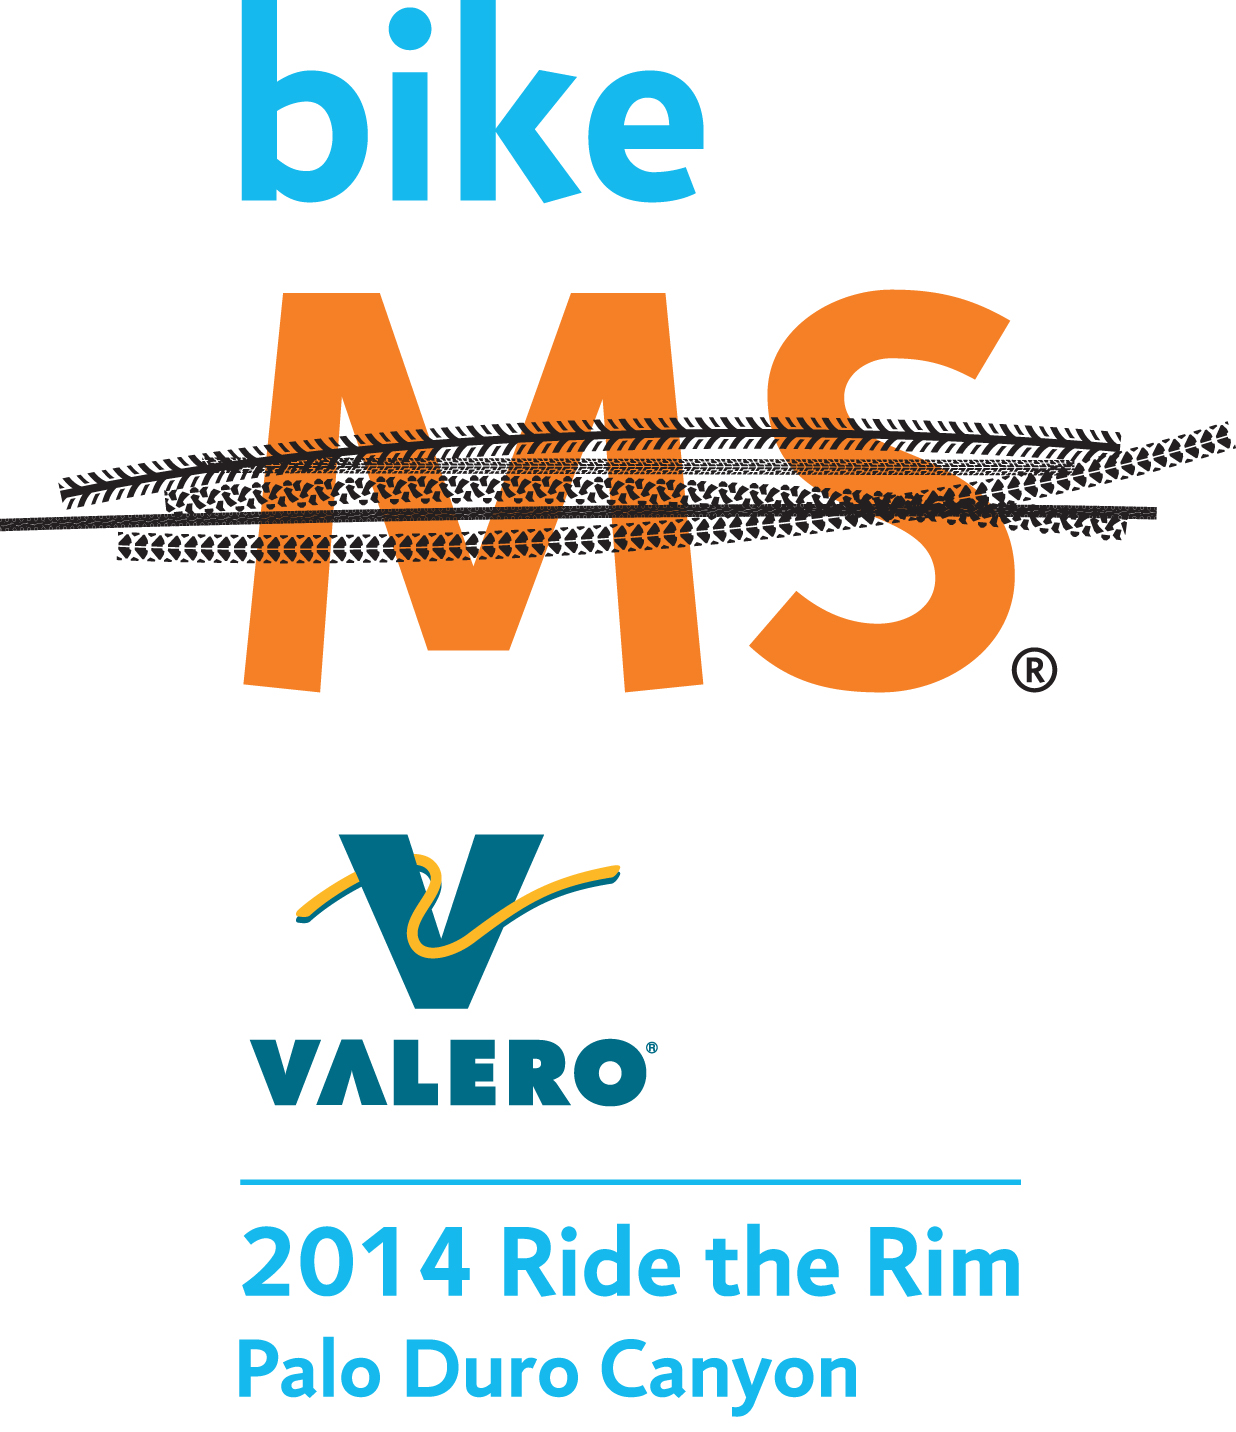 Monthly Ride Round Up - June 2014